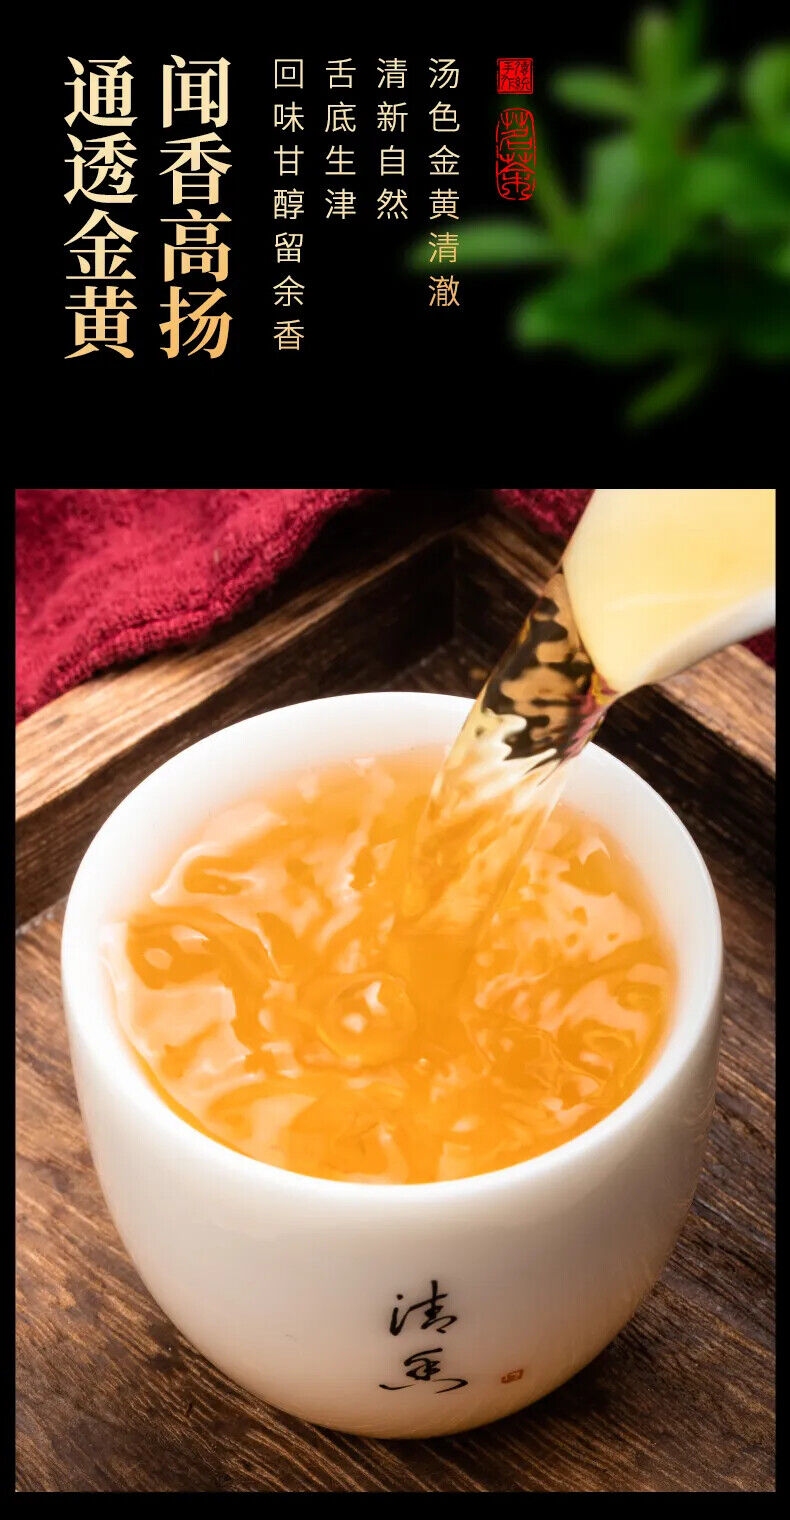 HelloYoung Taiwan Ginseng Oolong Tea Strong Flavor Frozen Top Oolong Tea Health Tea 300g